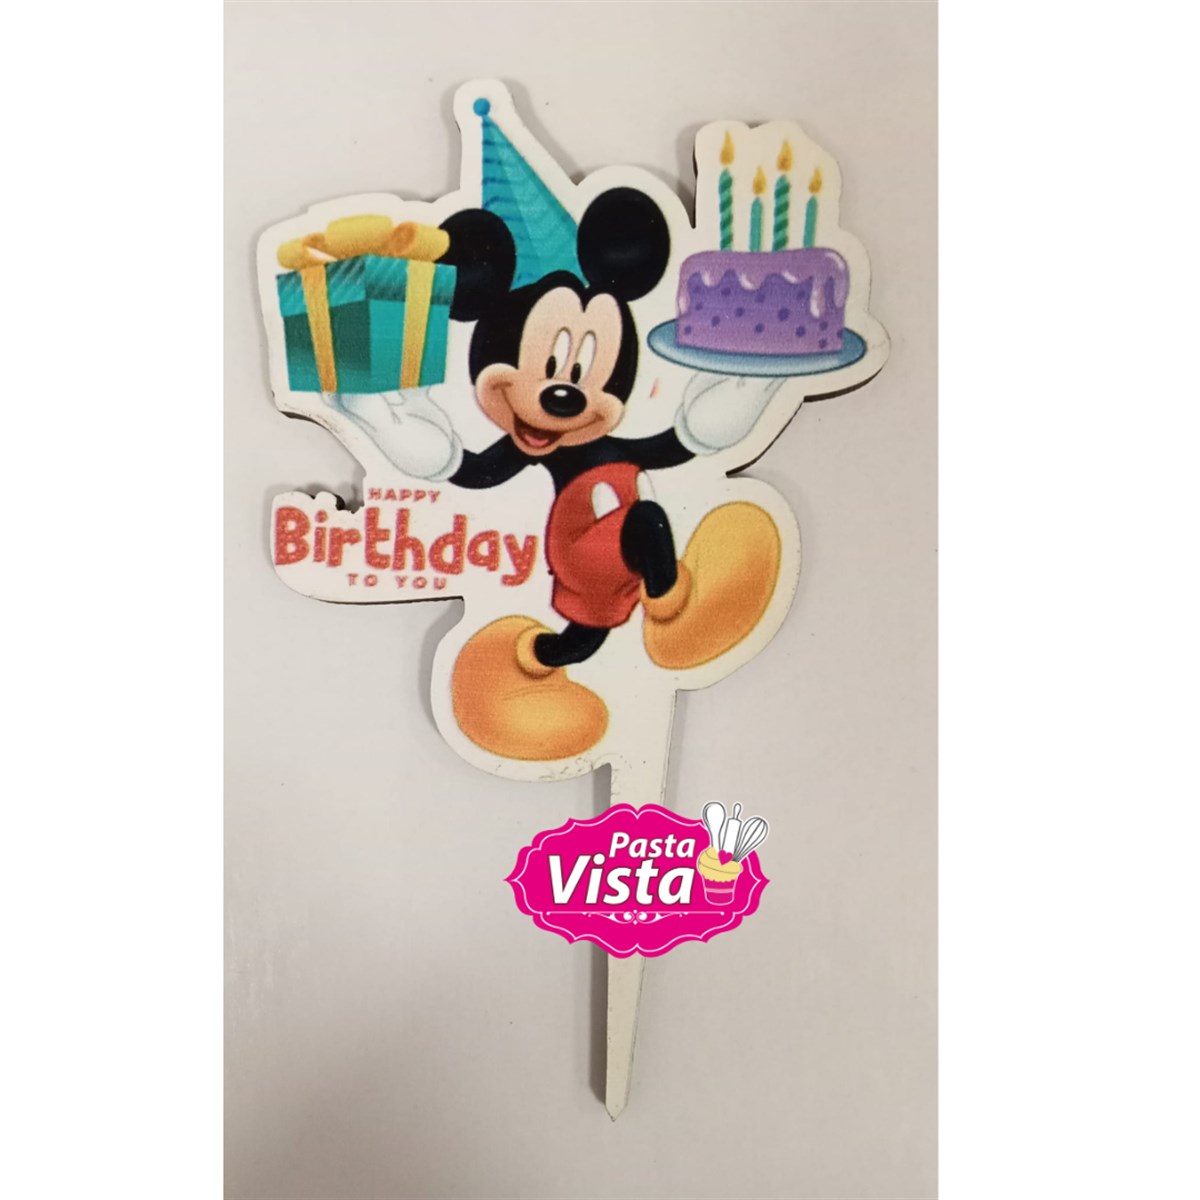 Pasta Vista| Pasta Üzeri Ahşap Süs -Mickey Mouse